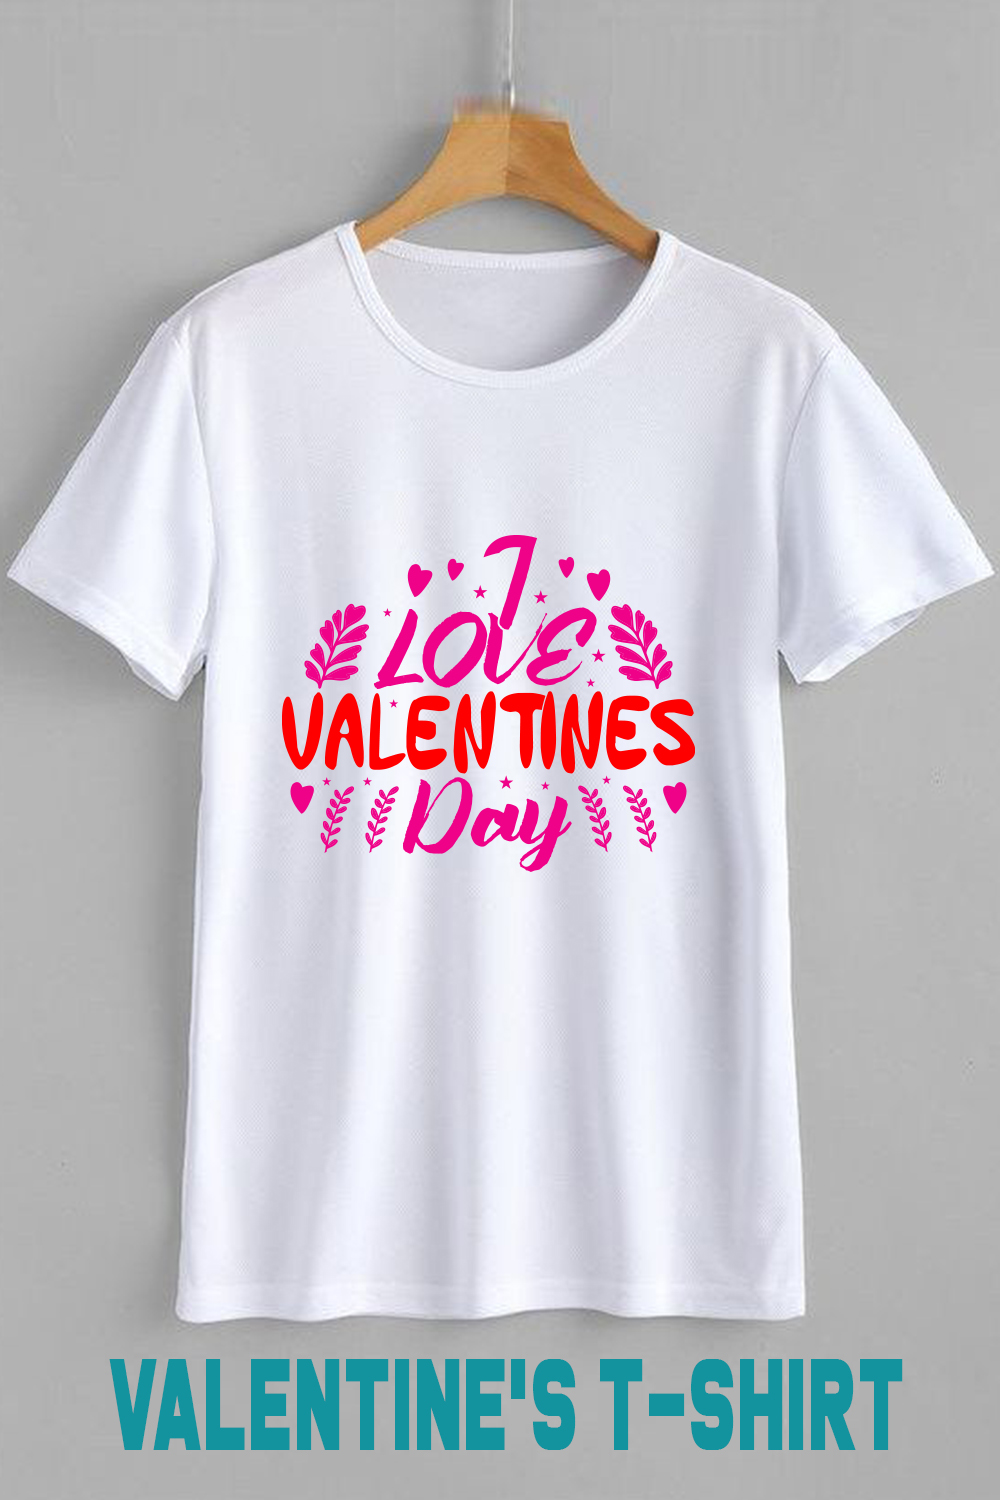 Valentine's Day Typography T-shirt Design pinterest image.